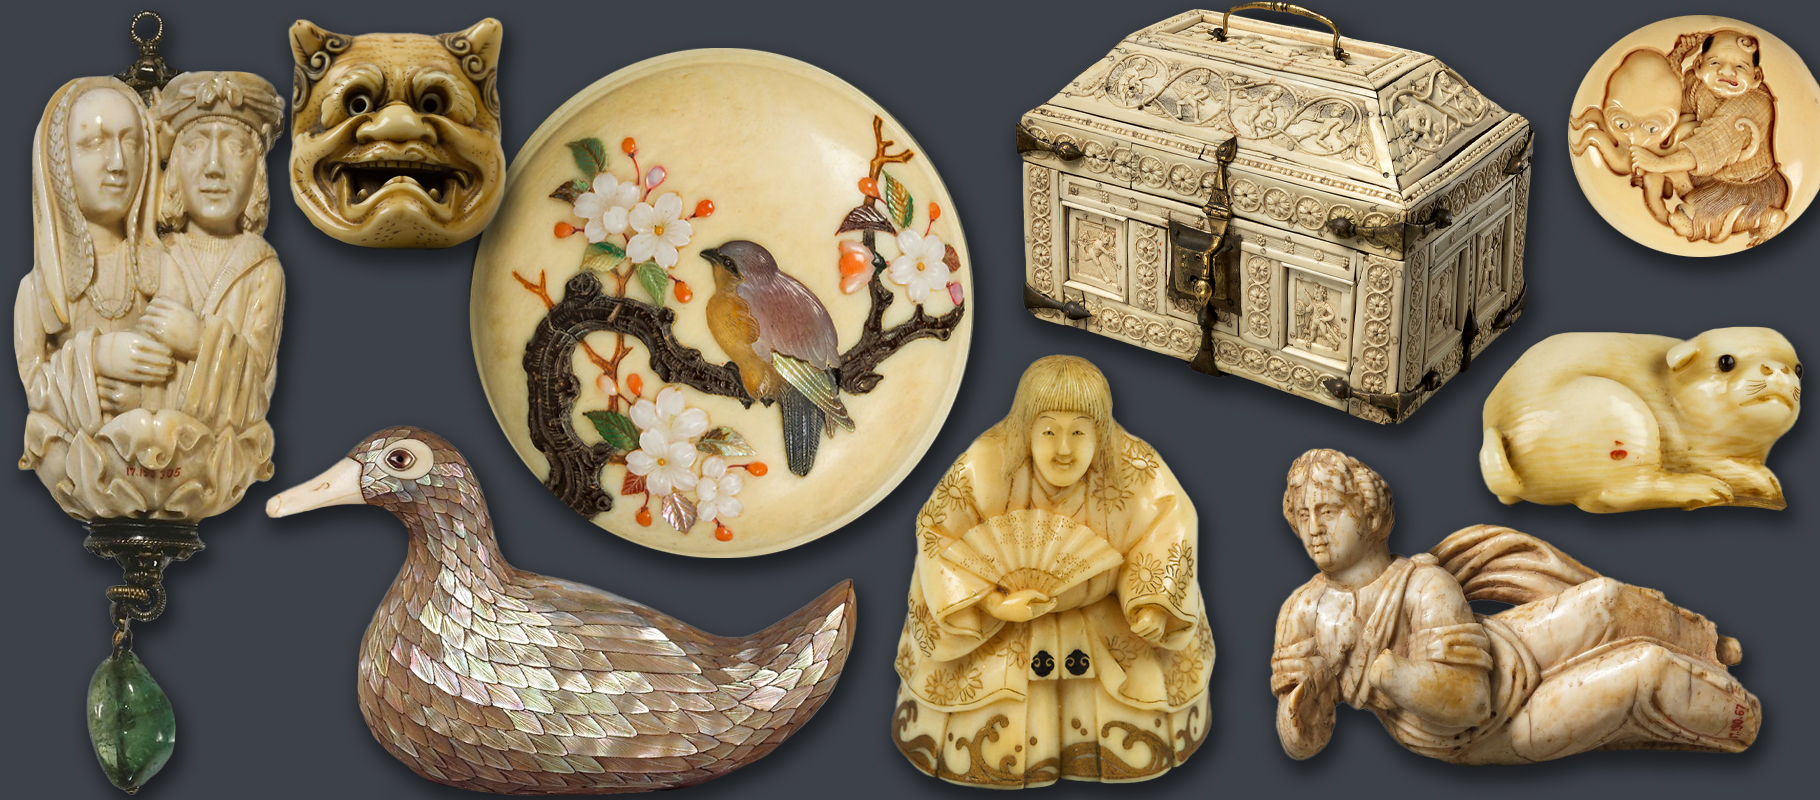 Ivory items